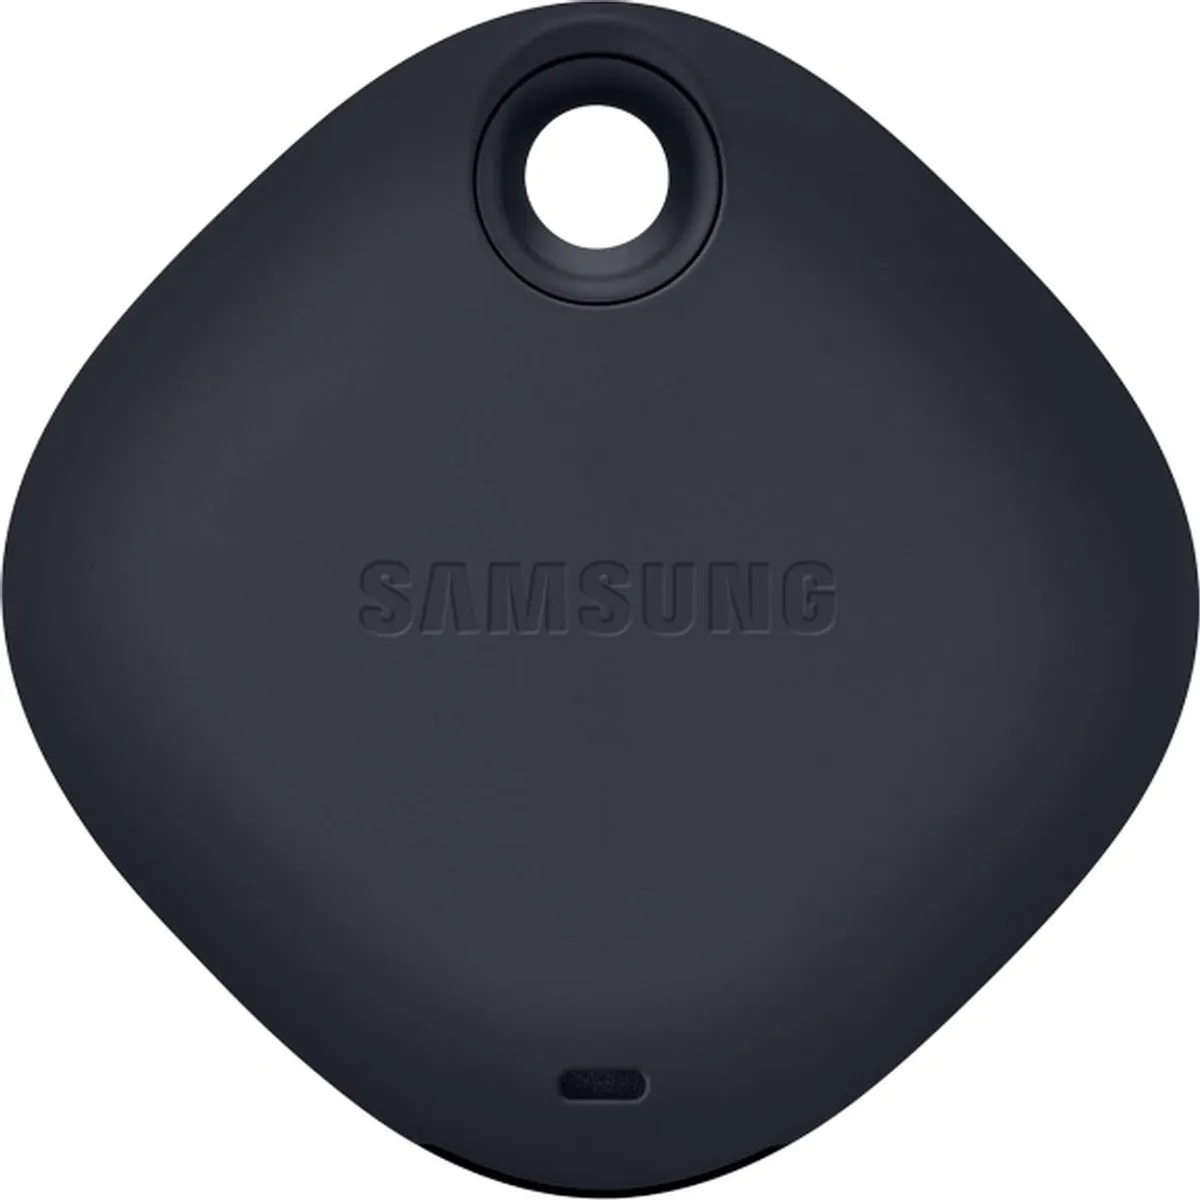 Samsung Метка Galaxy SmartTag